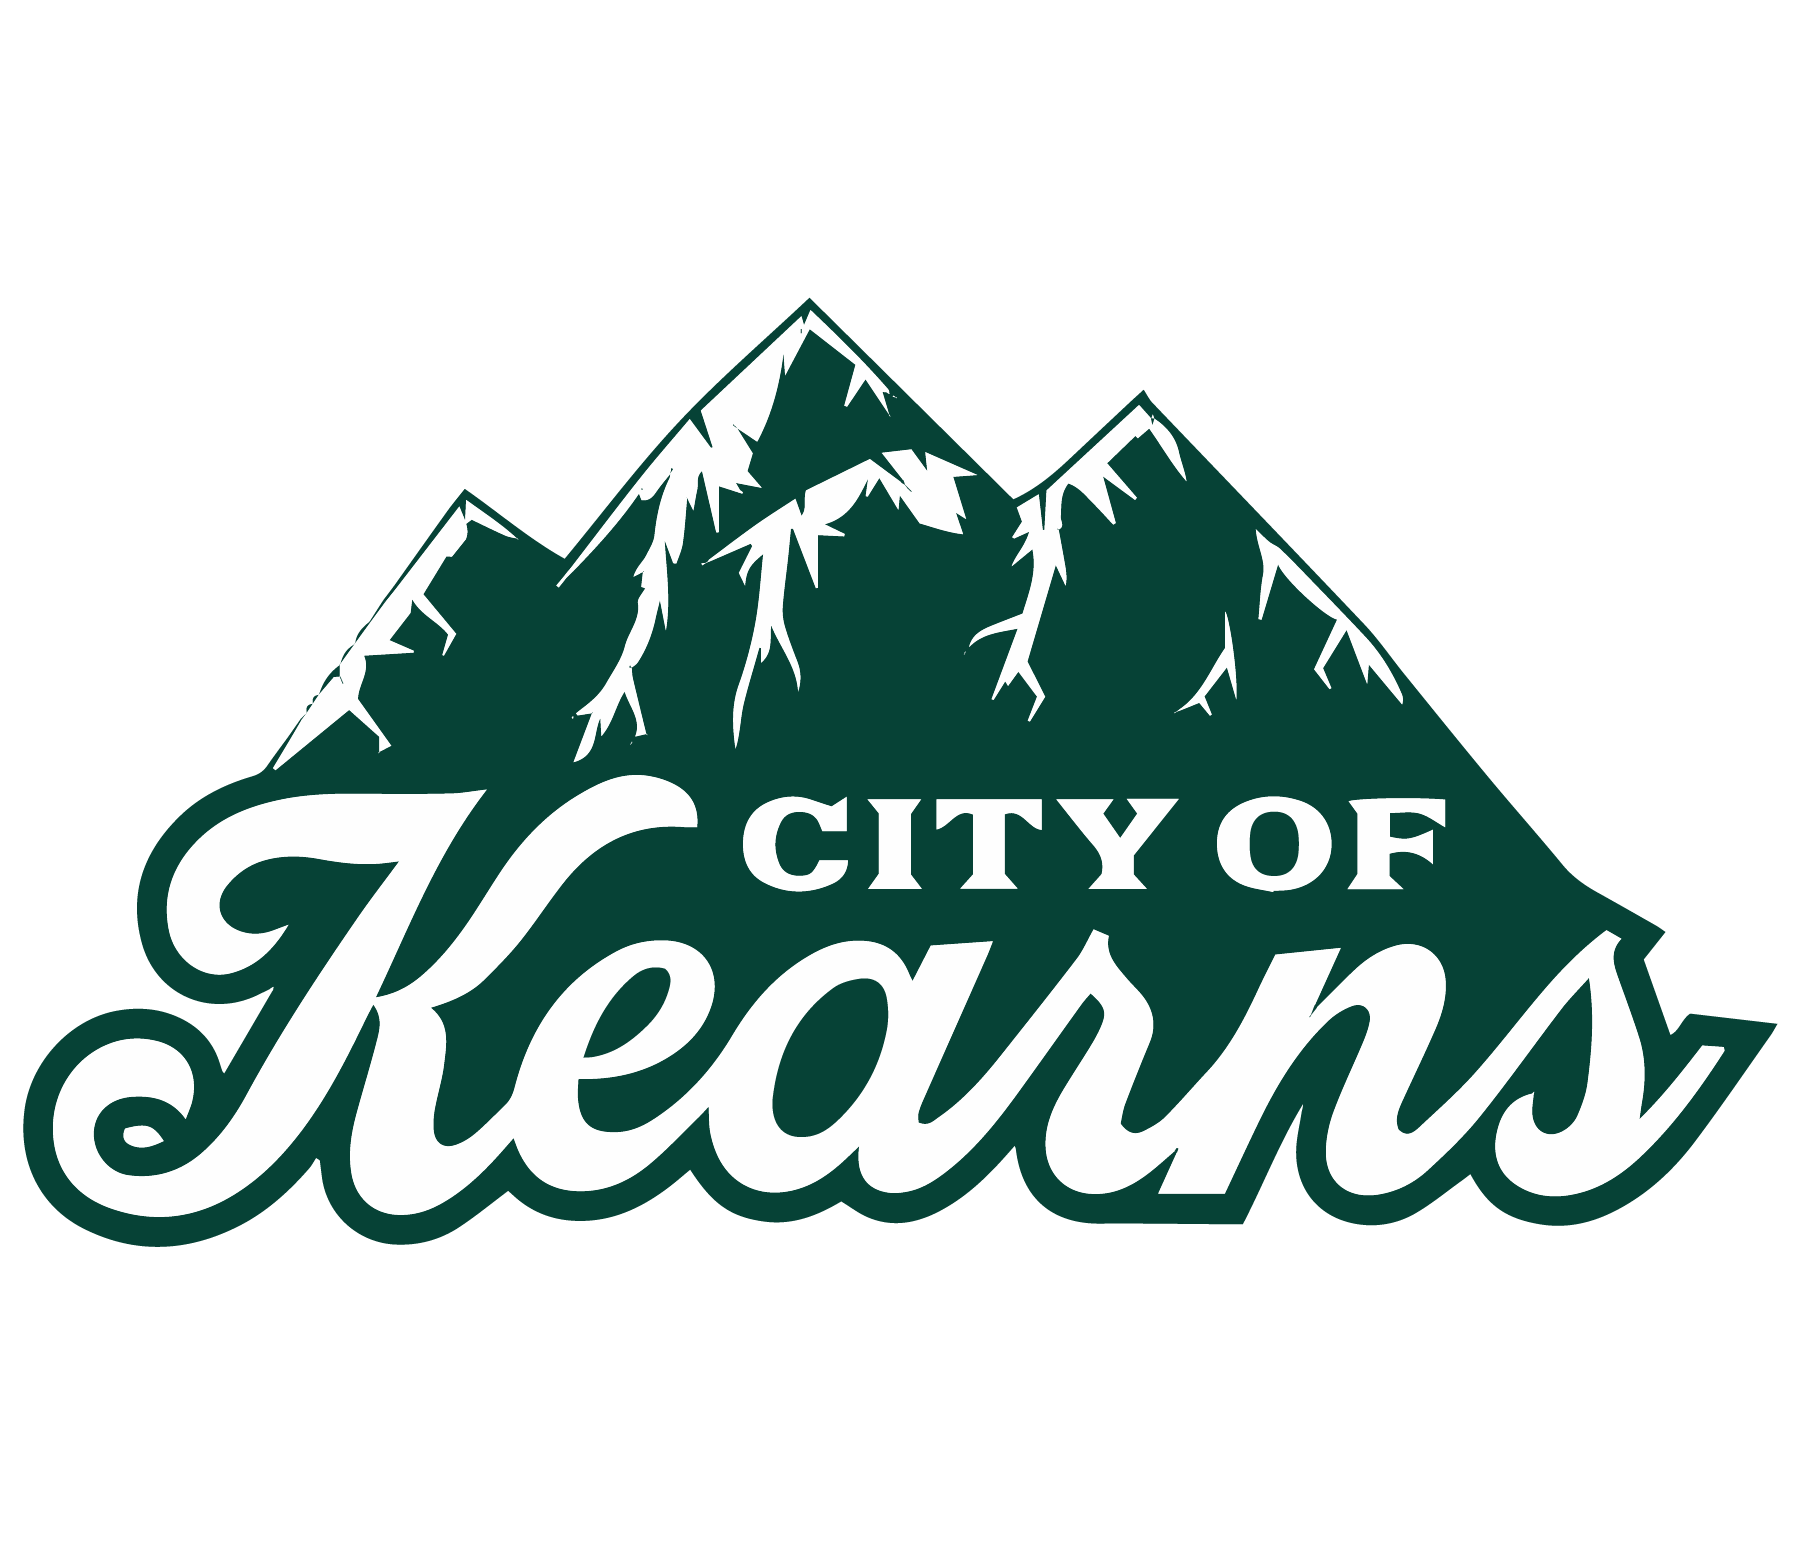 Kearns Logo